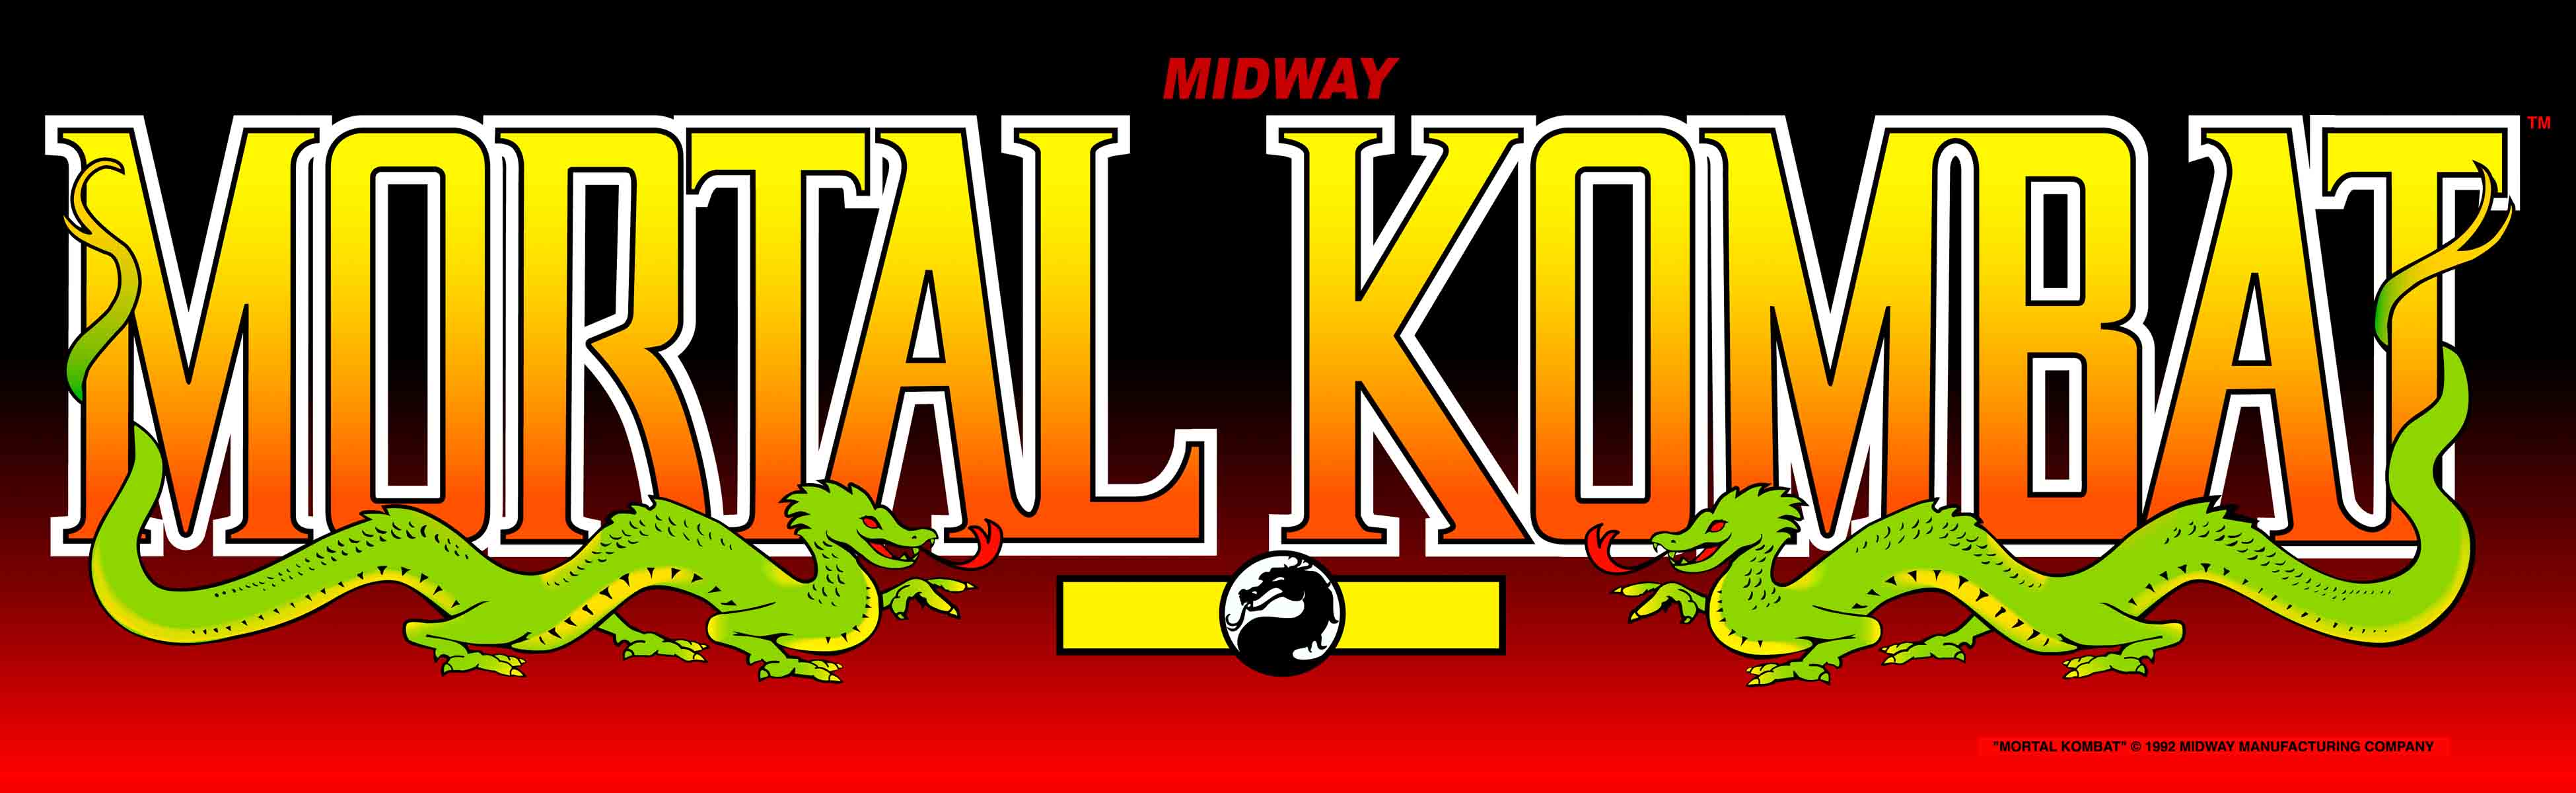 mortal kombat arcade steam download free